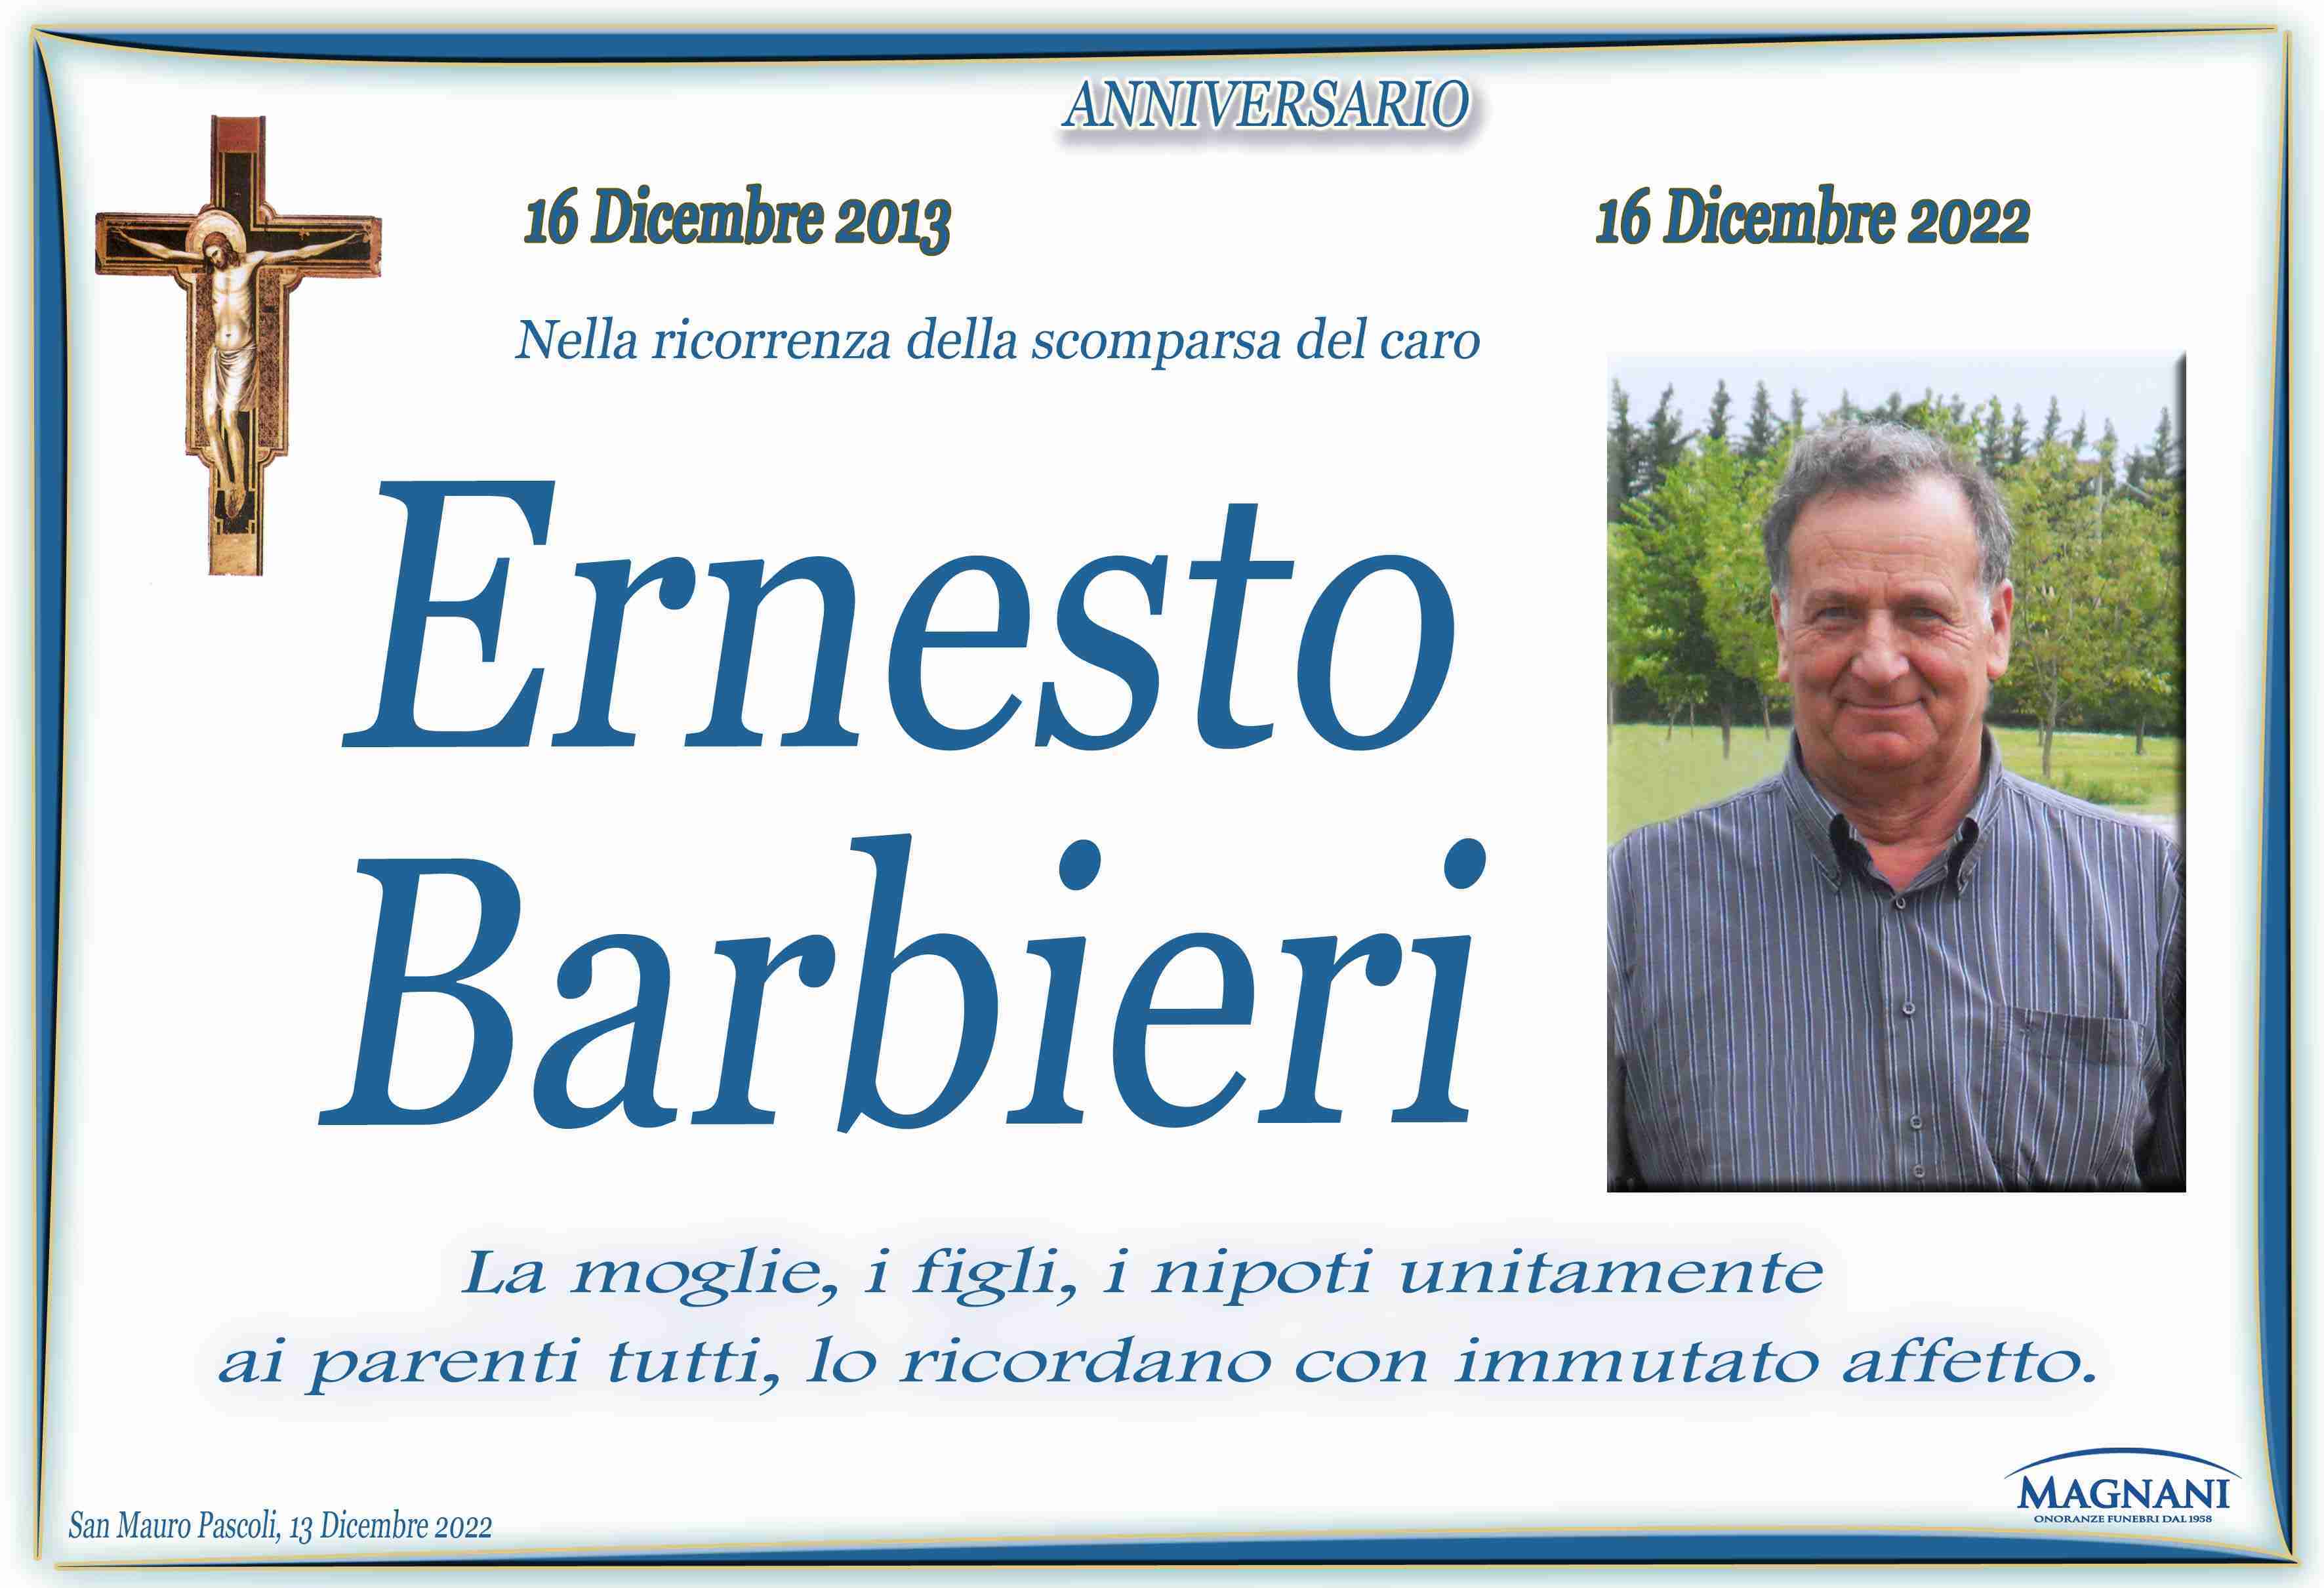 Ernesto Barbieri